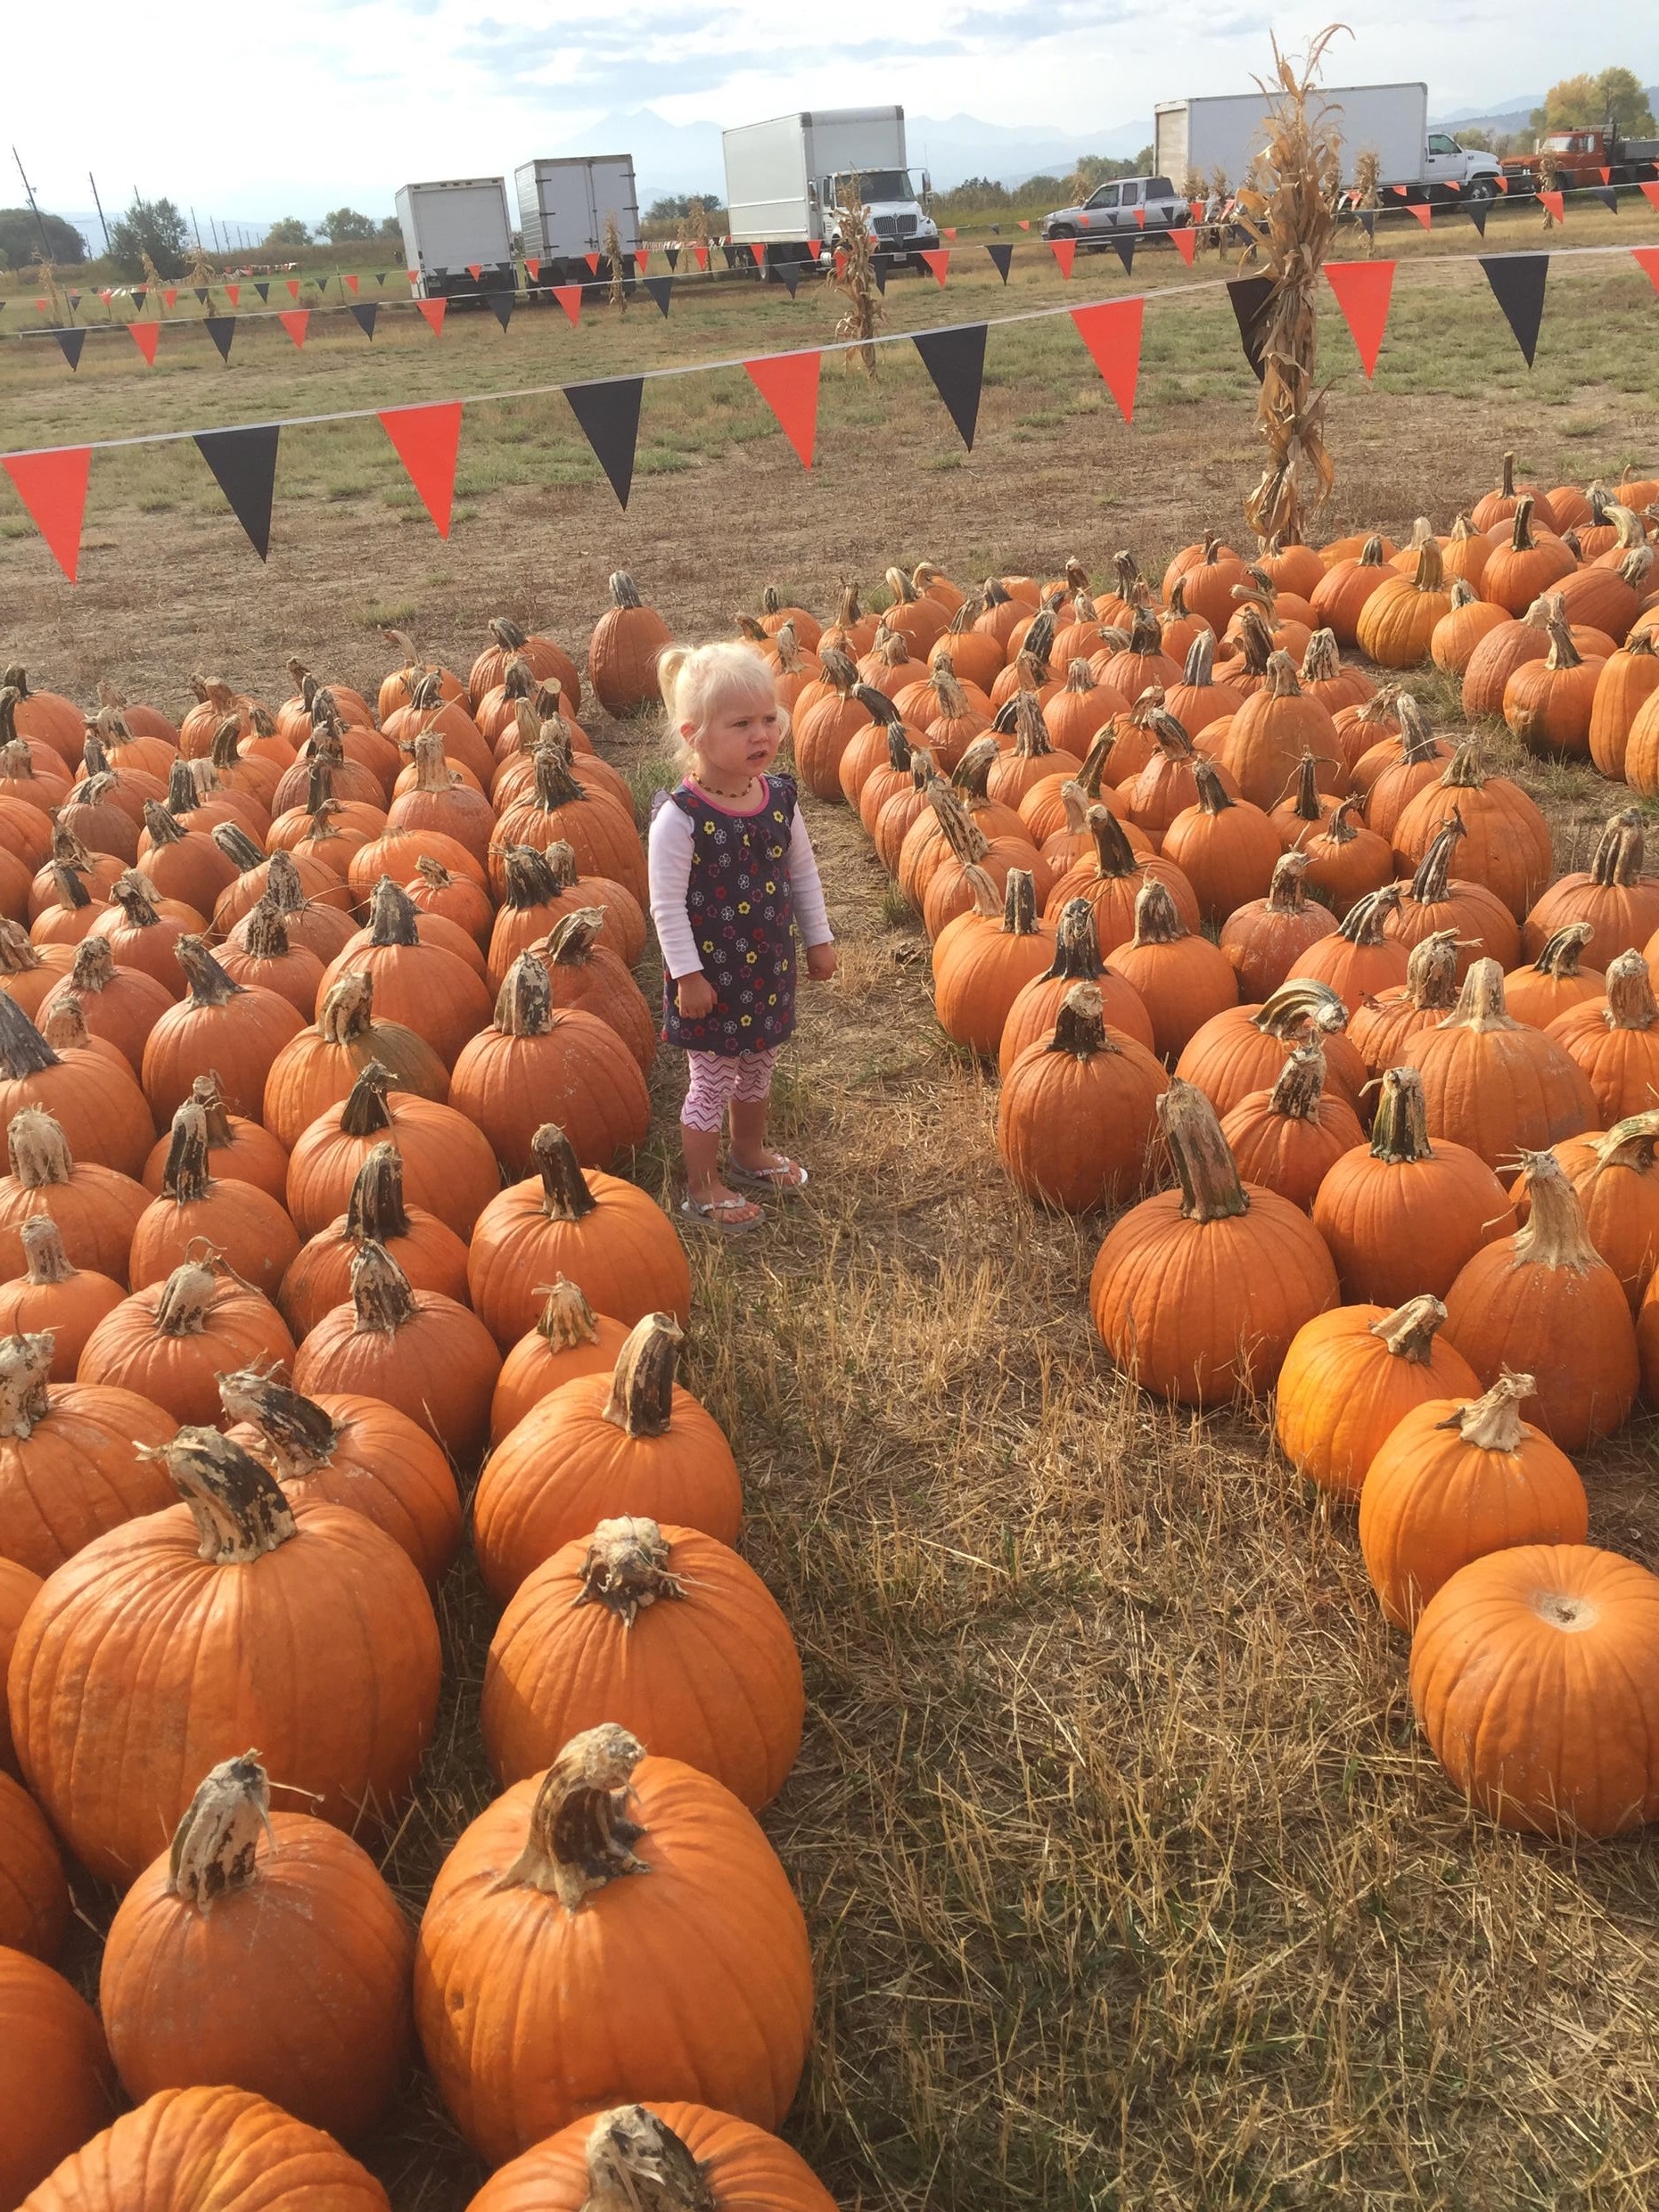 Family Fun: The Pumpkin Patch